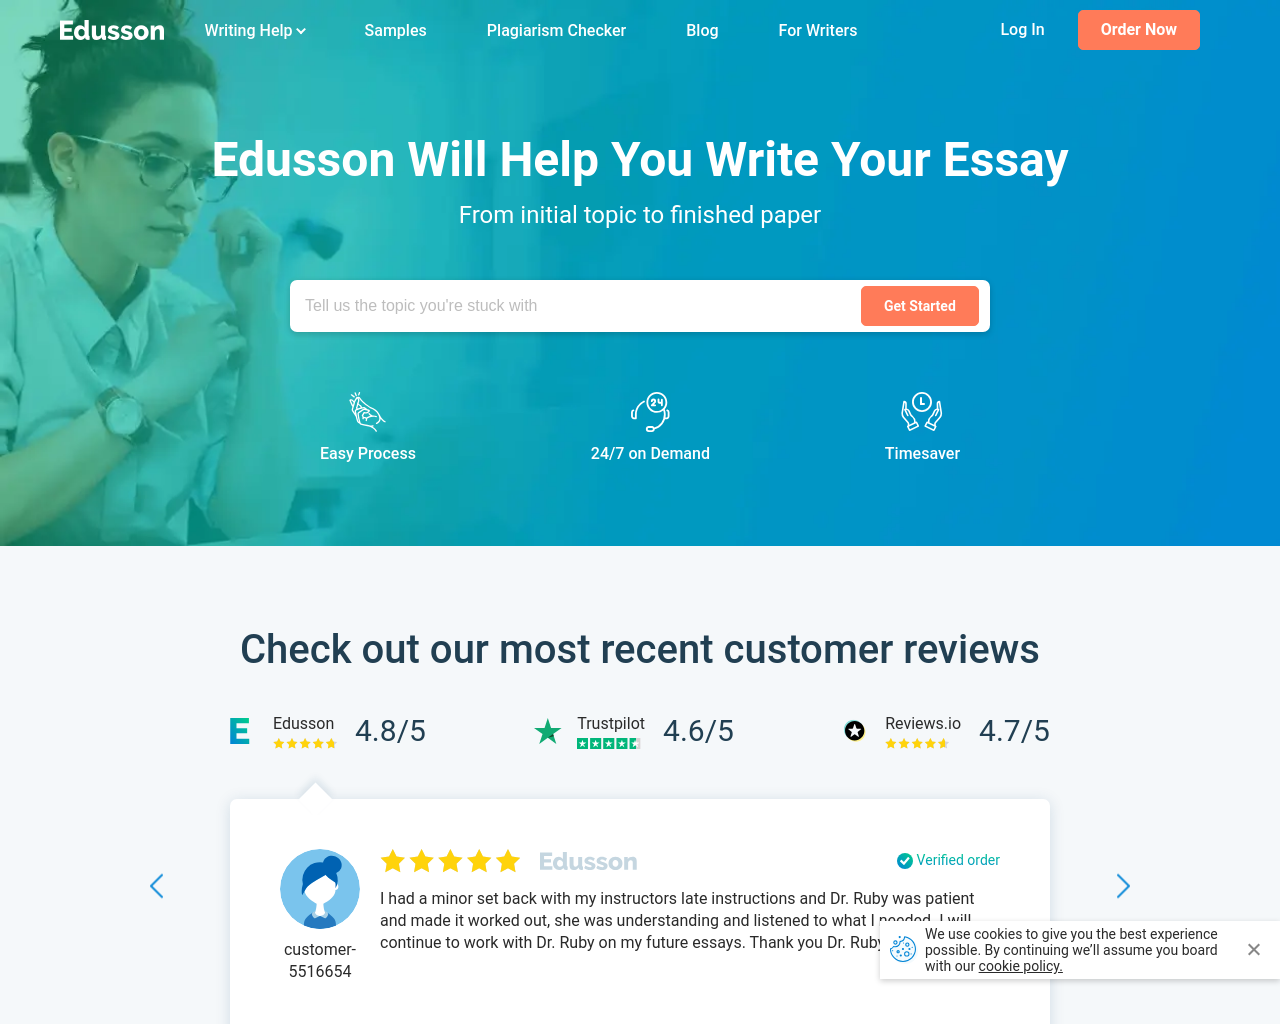 edusson.com